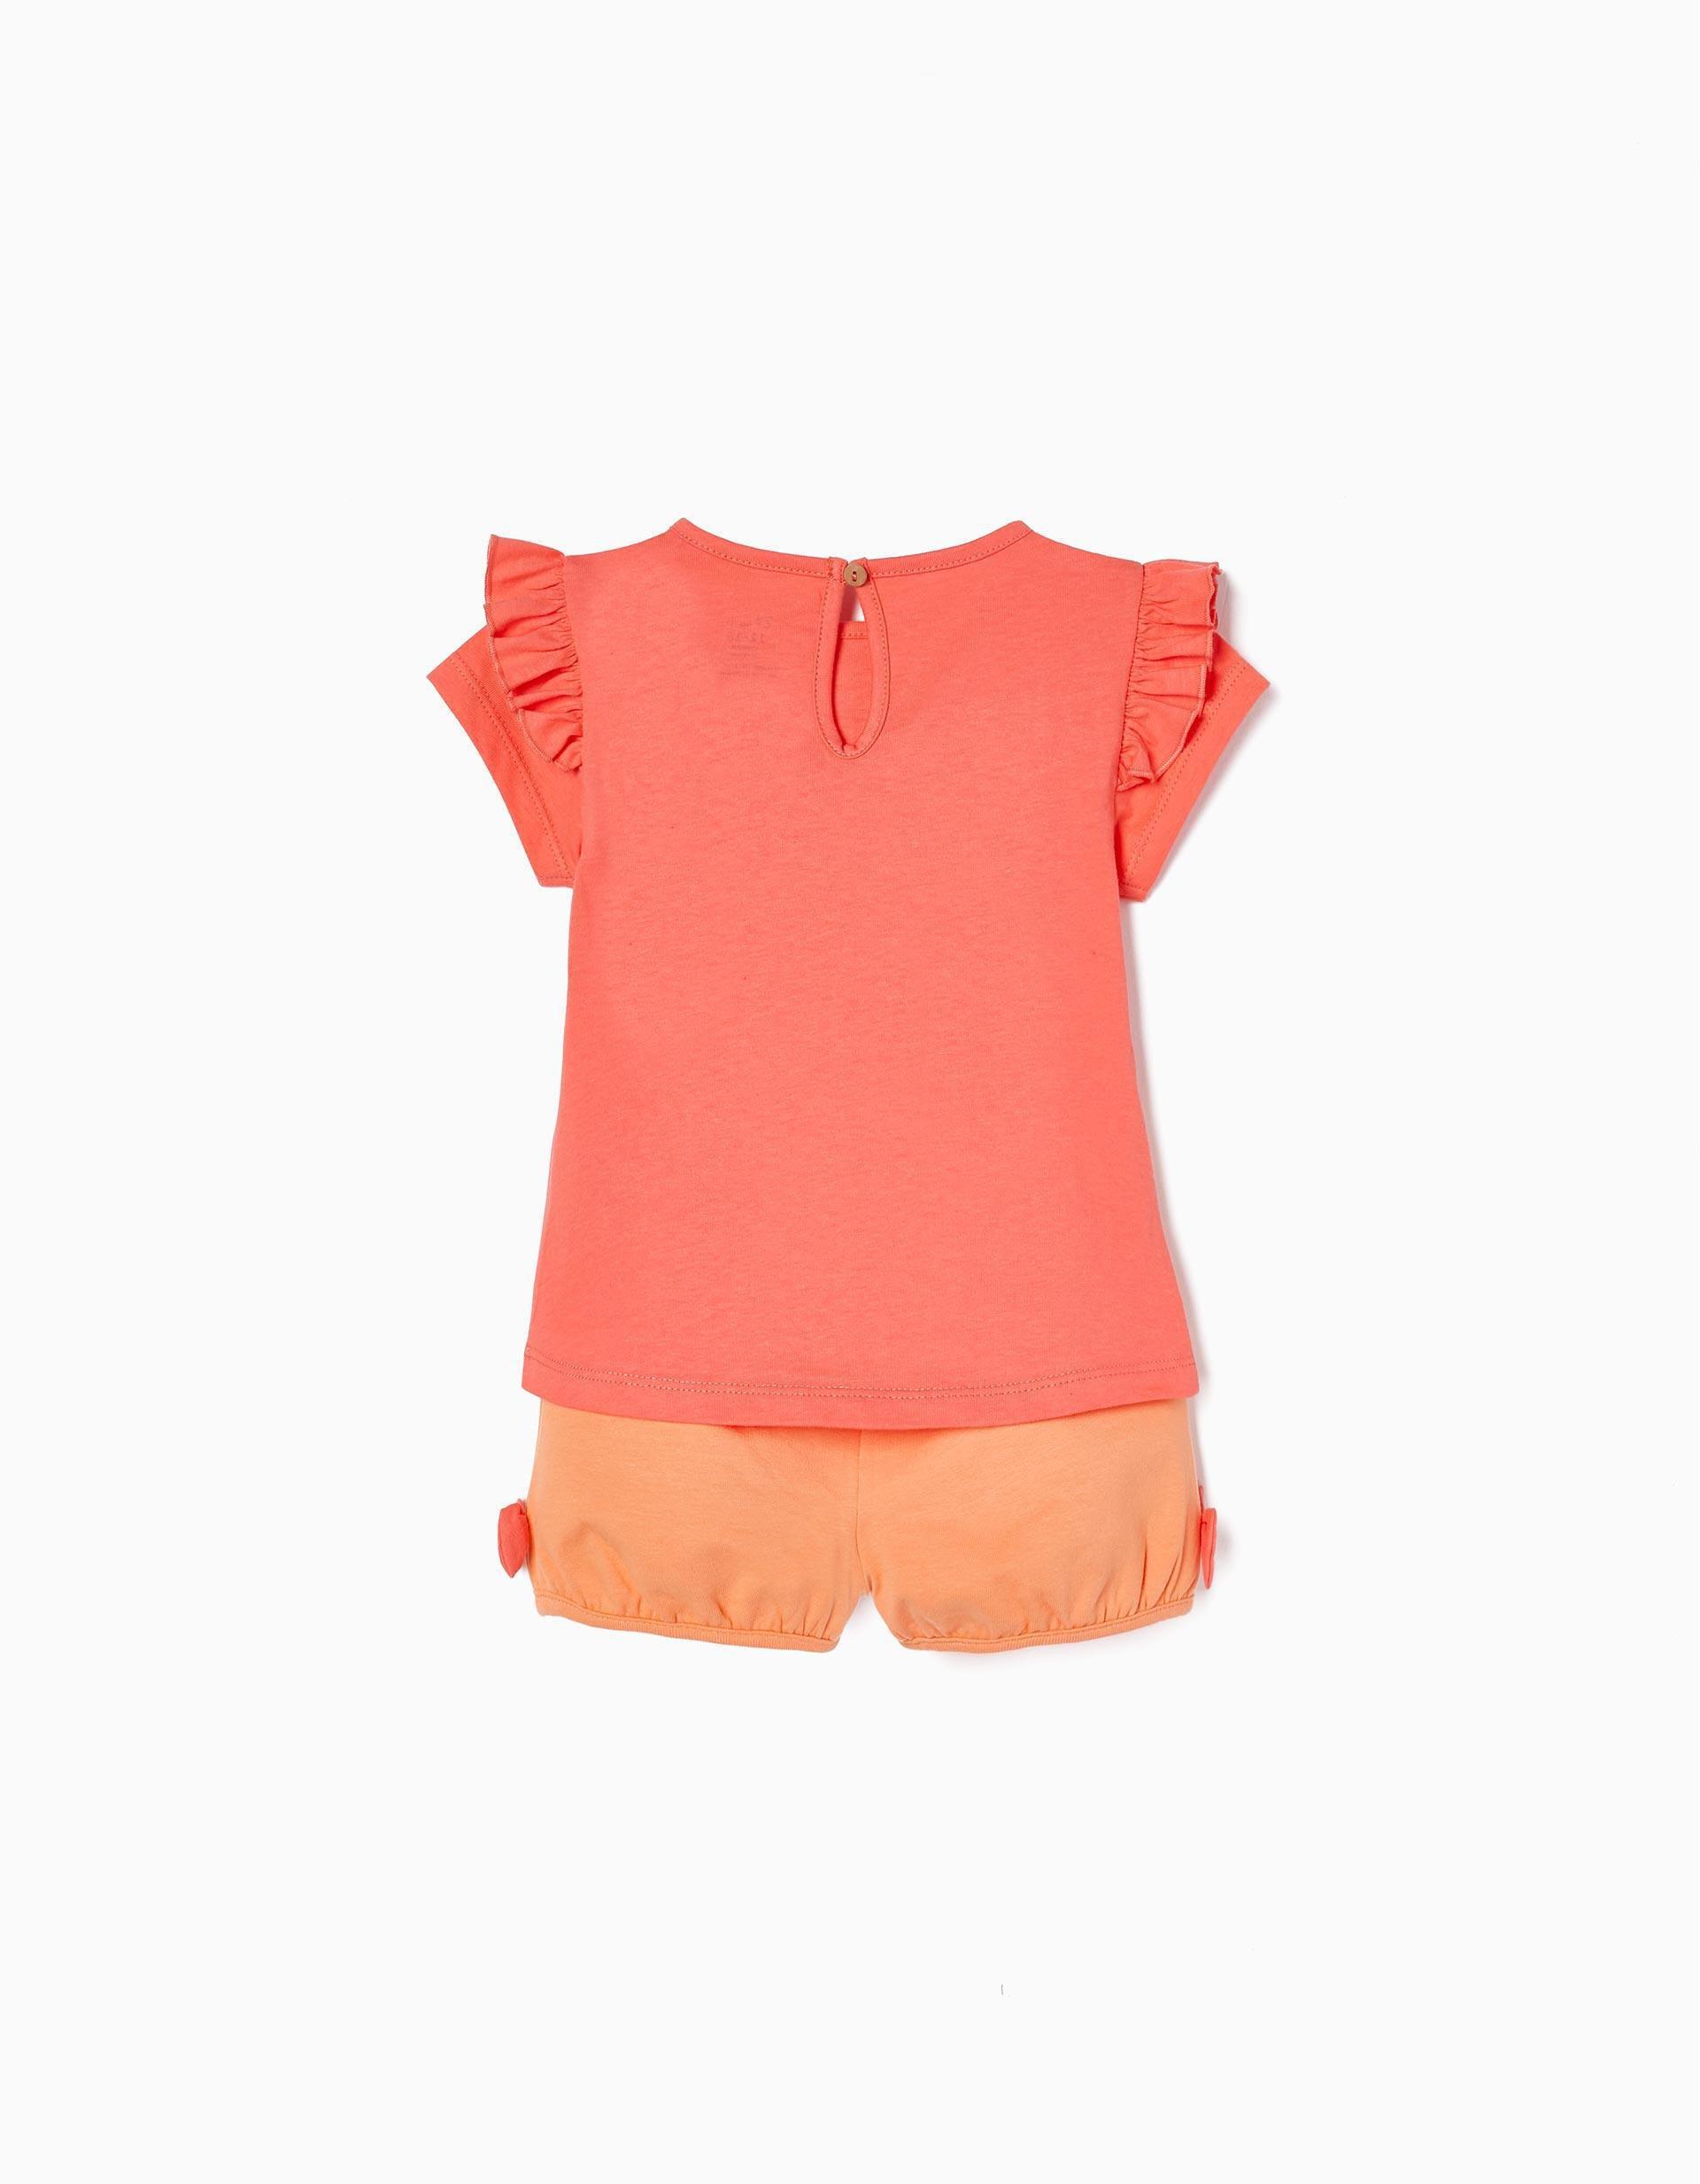 Gant - Orange Frilly Knitted Co-Ord Set, Baby Girls